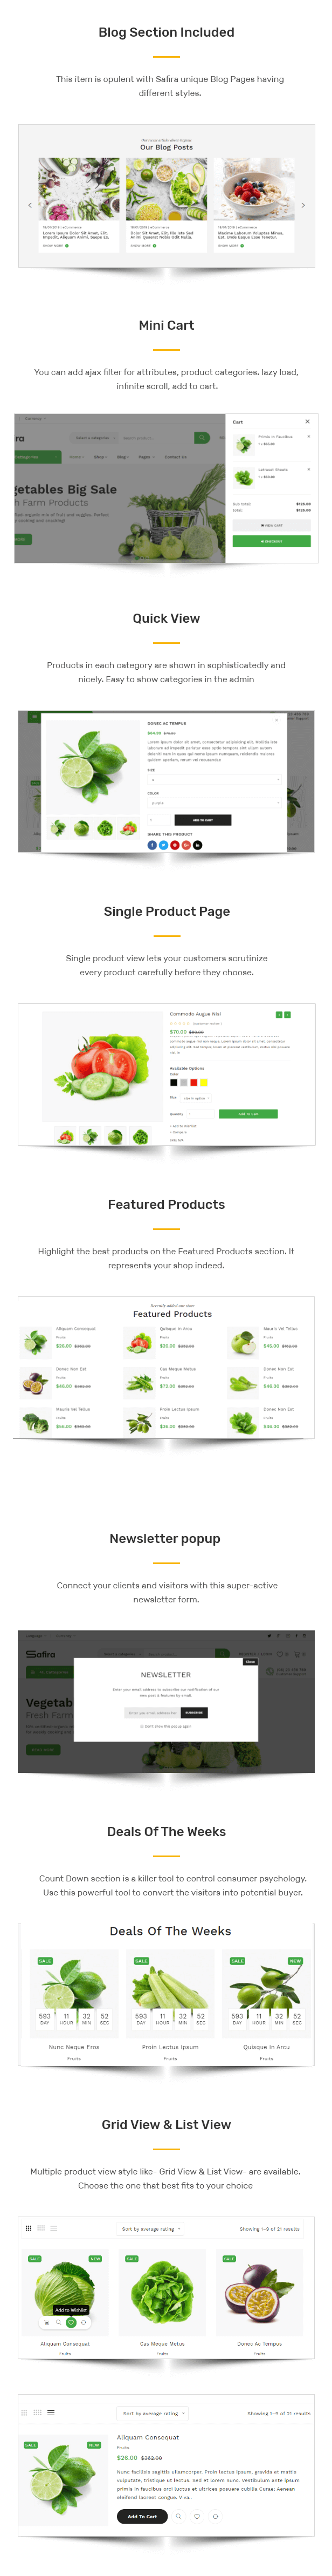 Safira - Organic food HTML Template